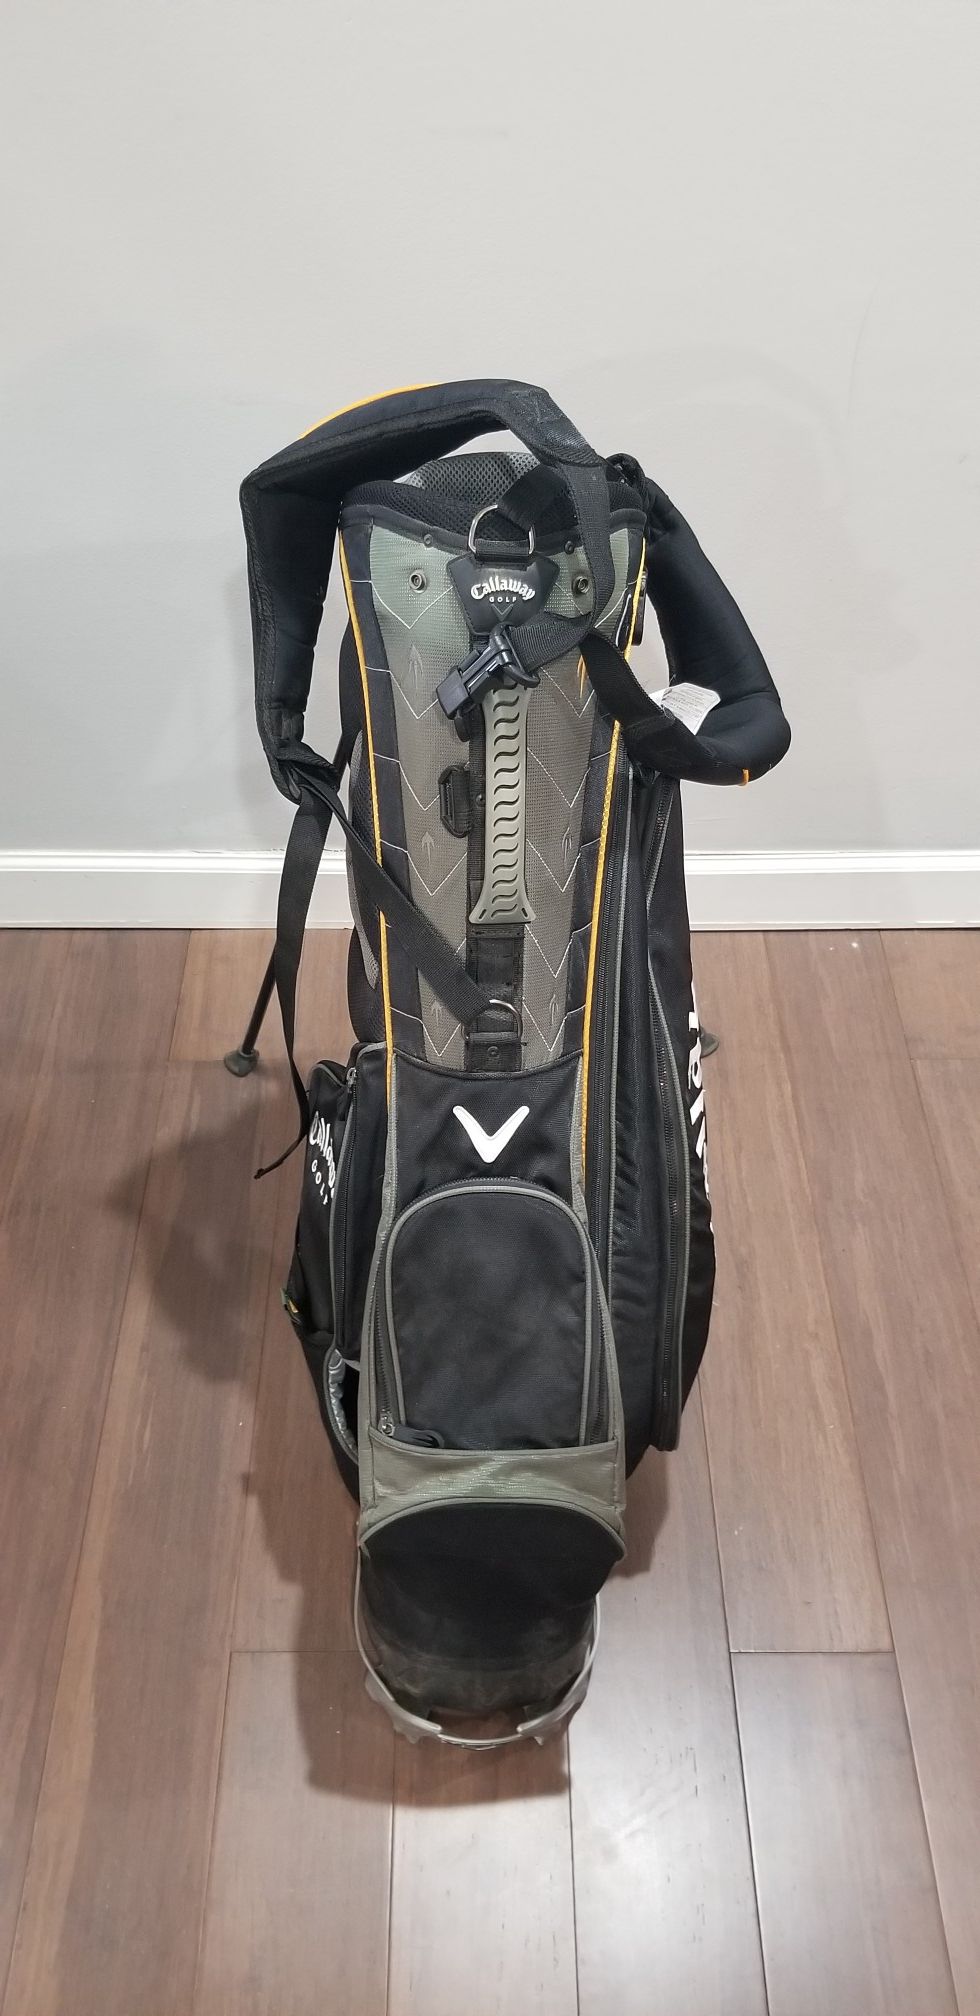 Callaway golf bag (cheap)